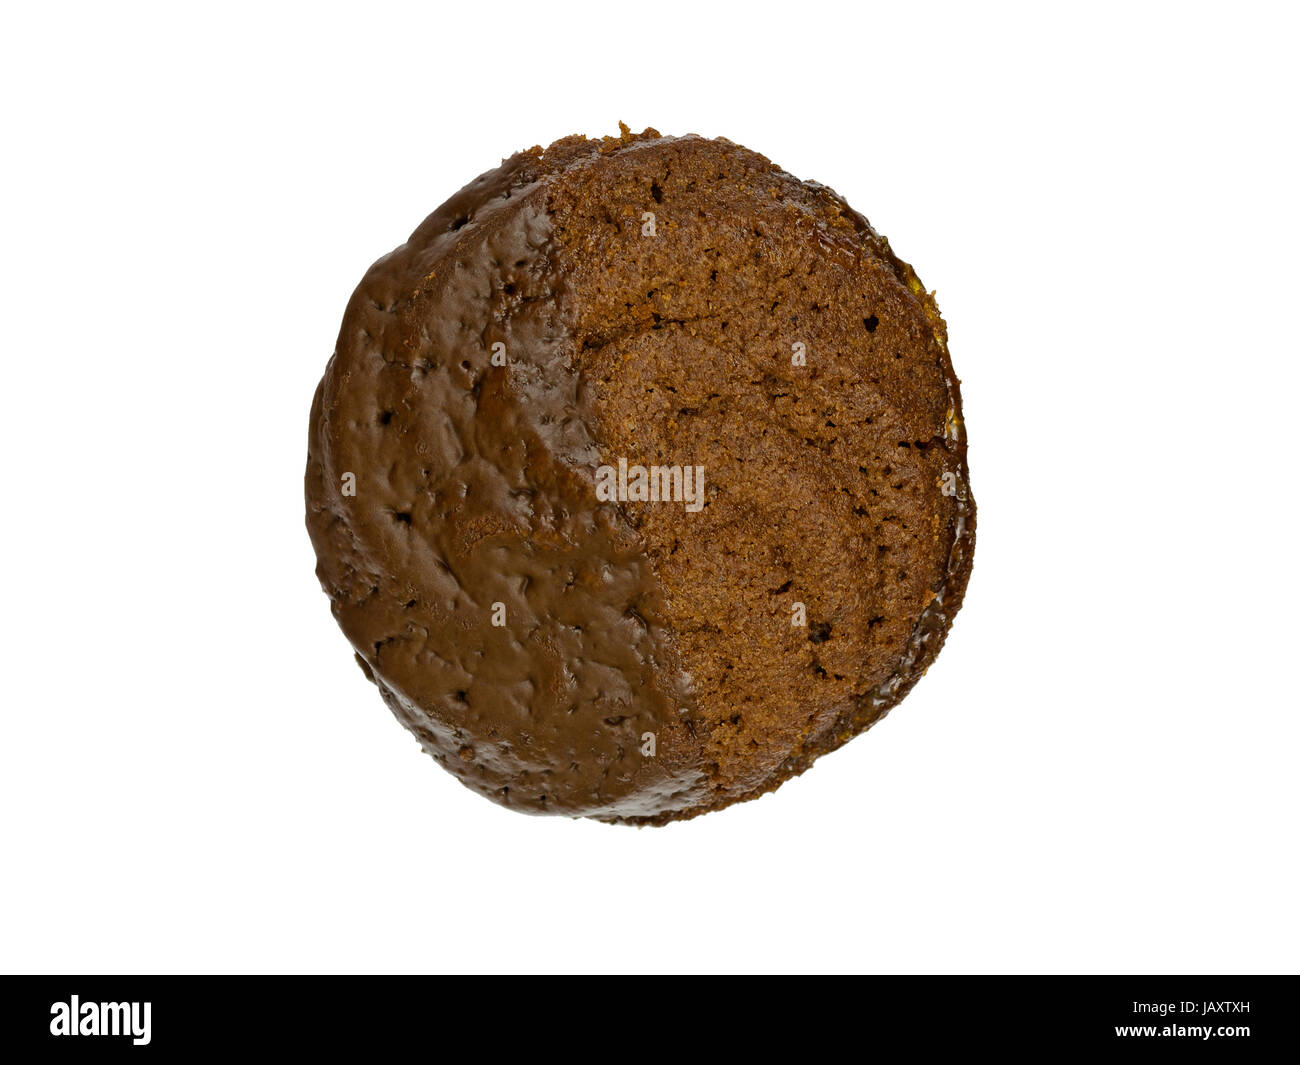 Hausgemachter getunkter Schokokeks; homemade dipped chocolate biscuit Stock Photo